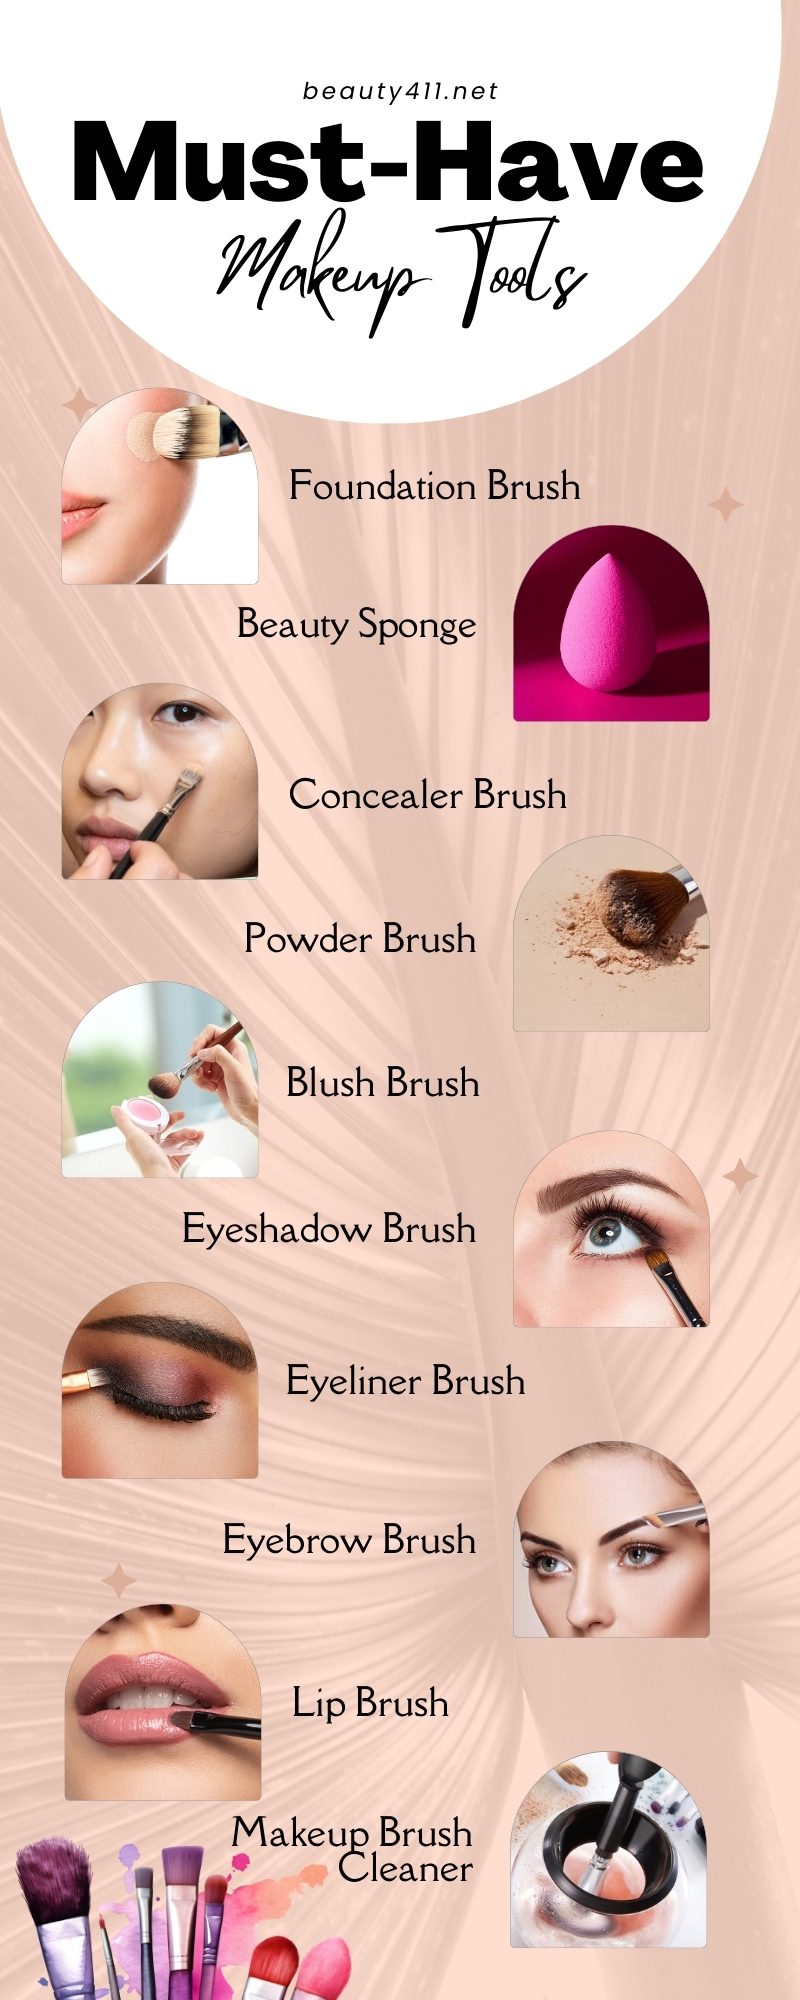 Makeup Brush Cleaner